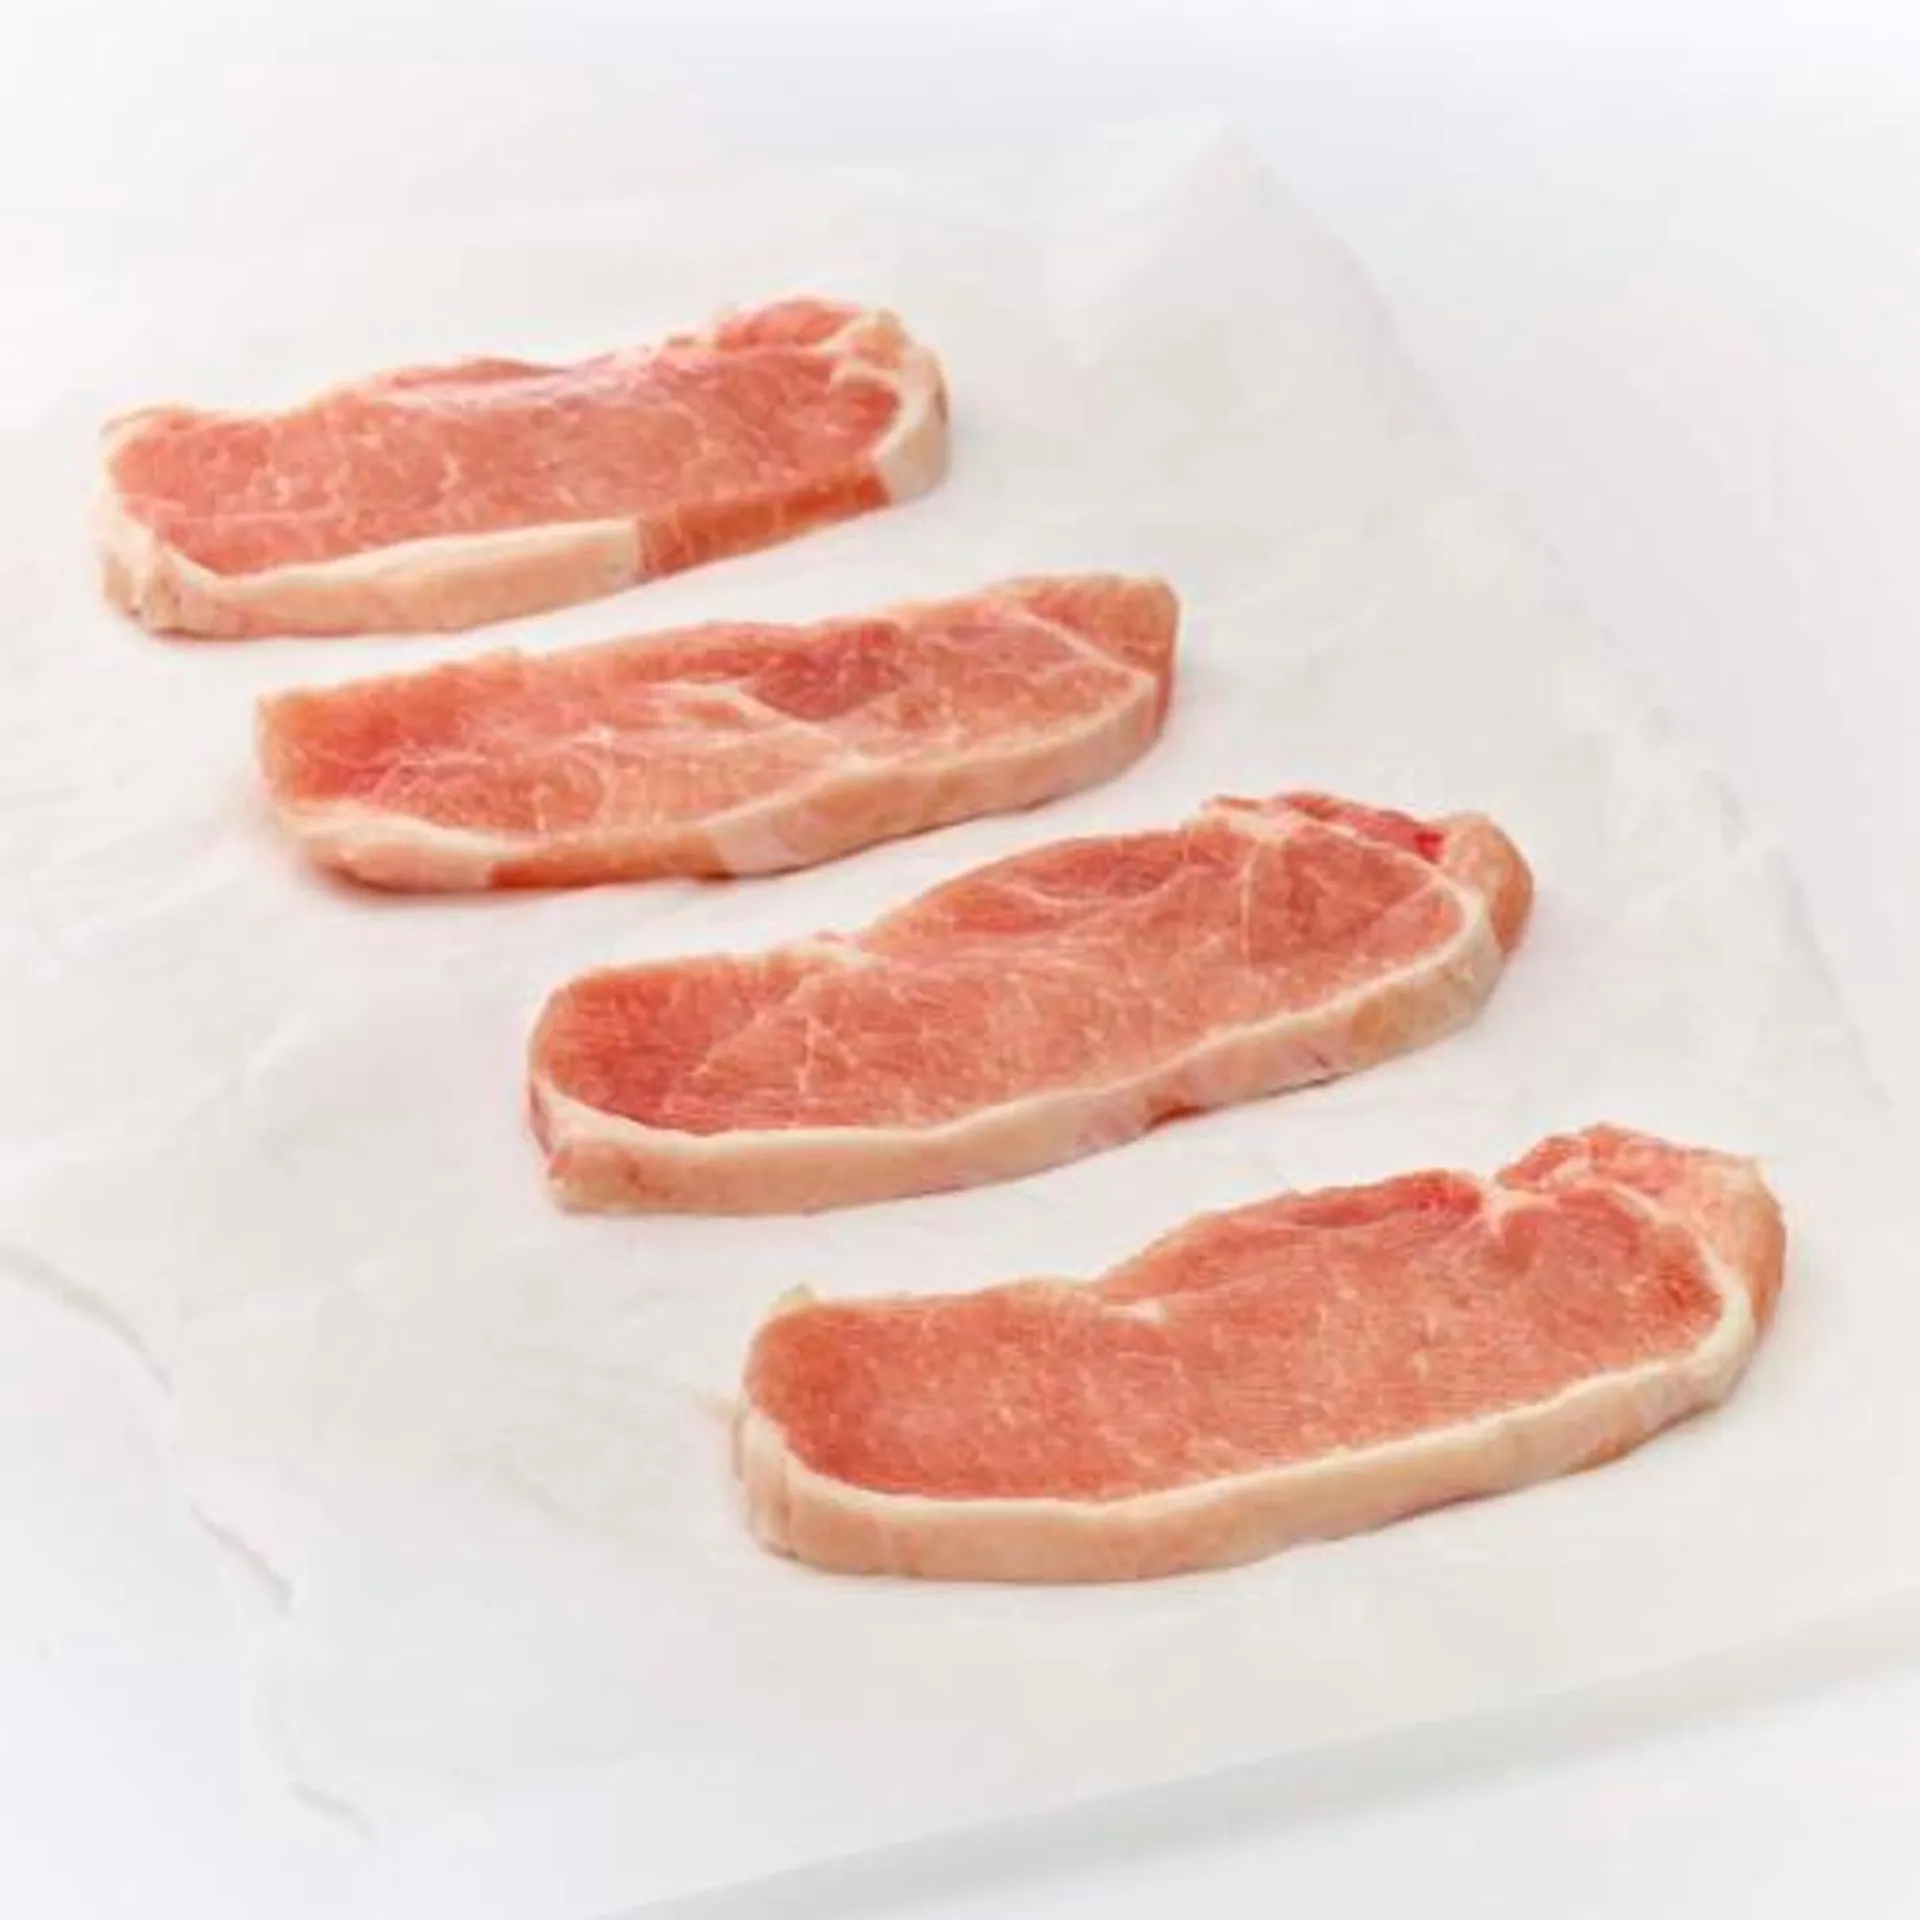 Moist & Tender Pork Center Thin Cut Chops (About 6-8 Chops per Pack)